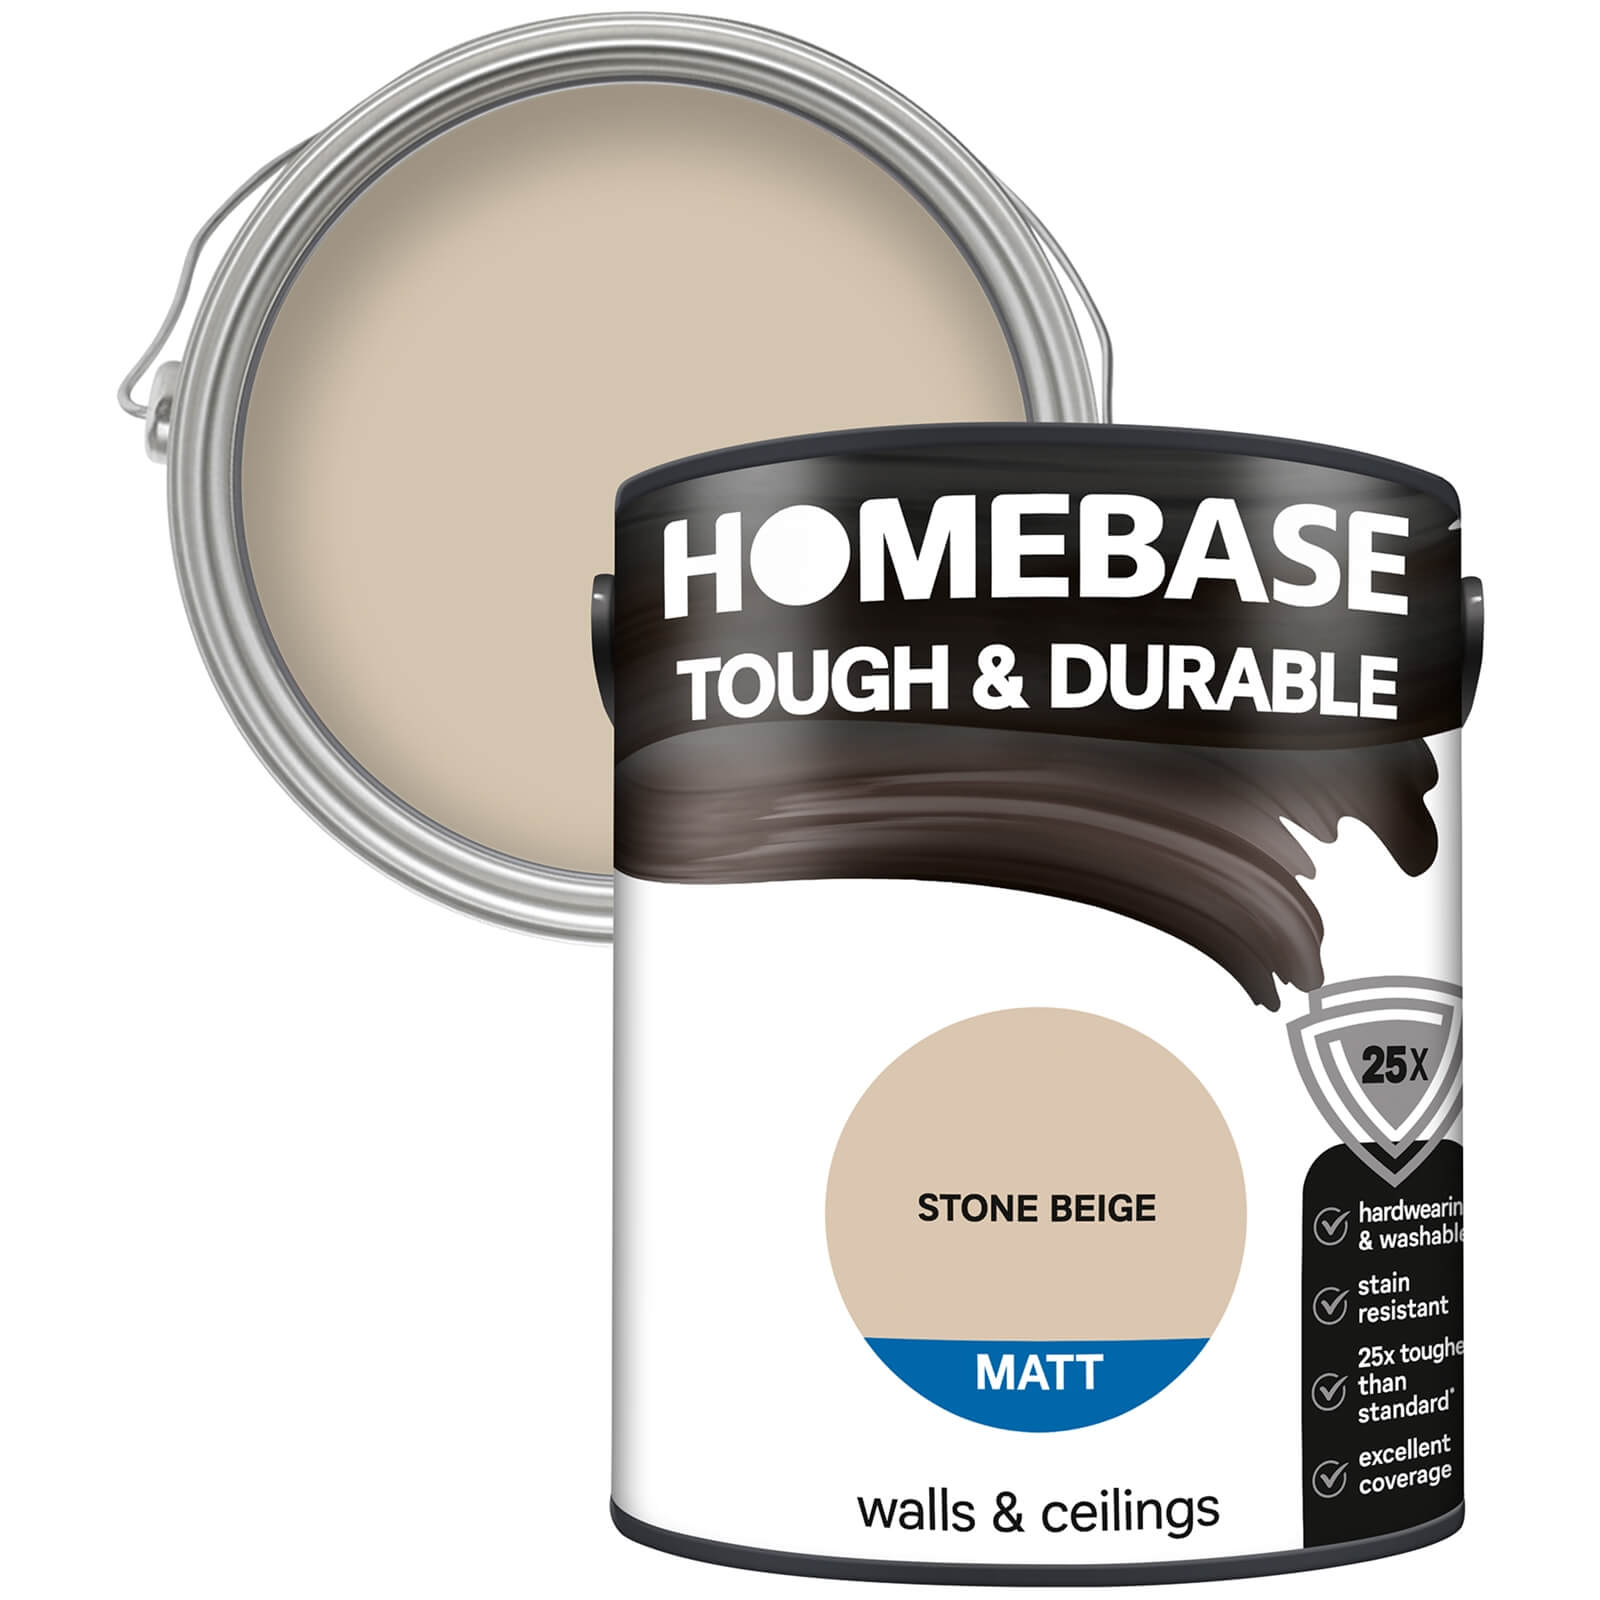 Homebase Tough & Durable Matt Paint Stone Beige - 5L